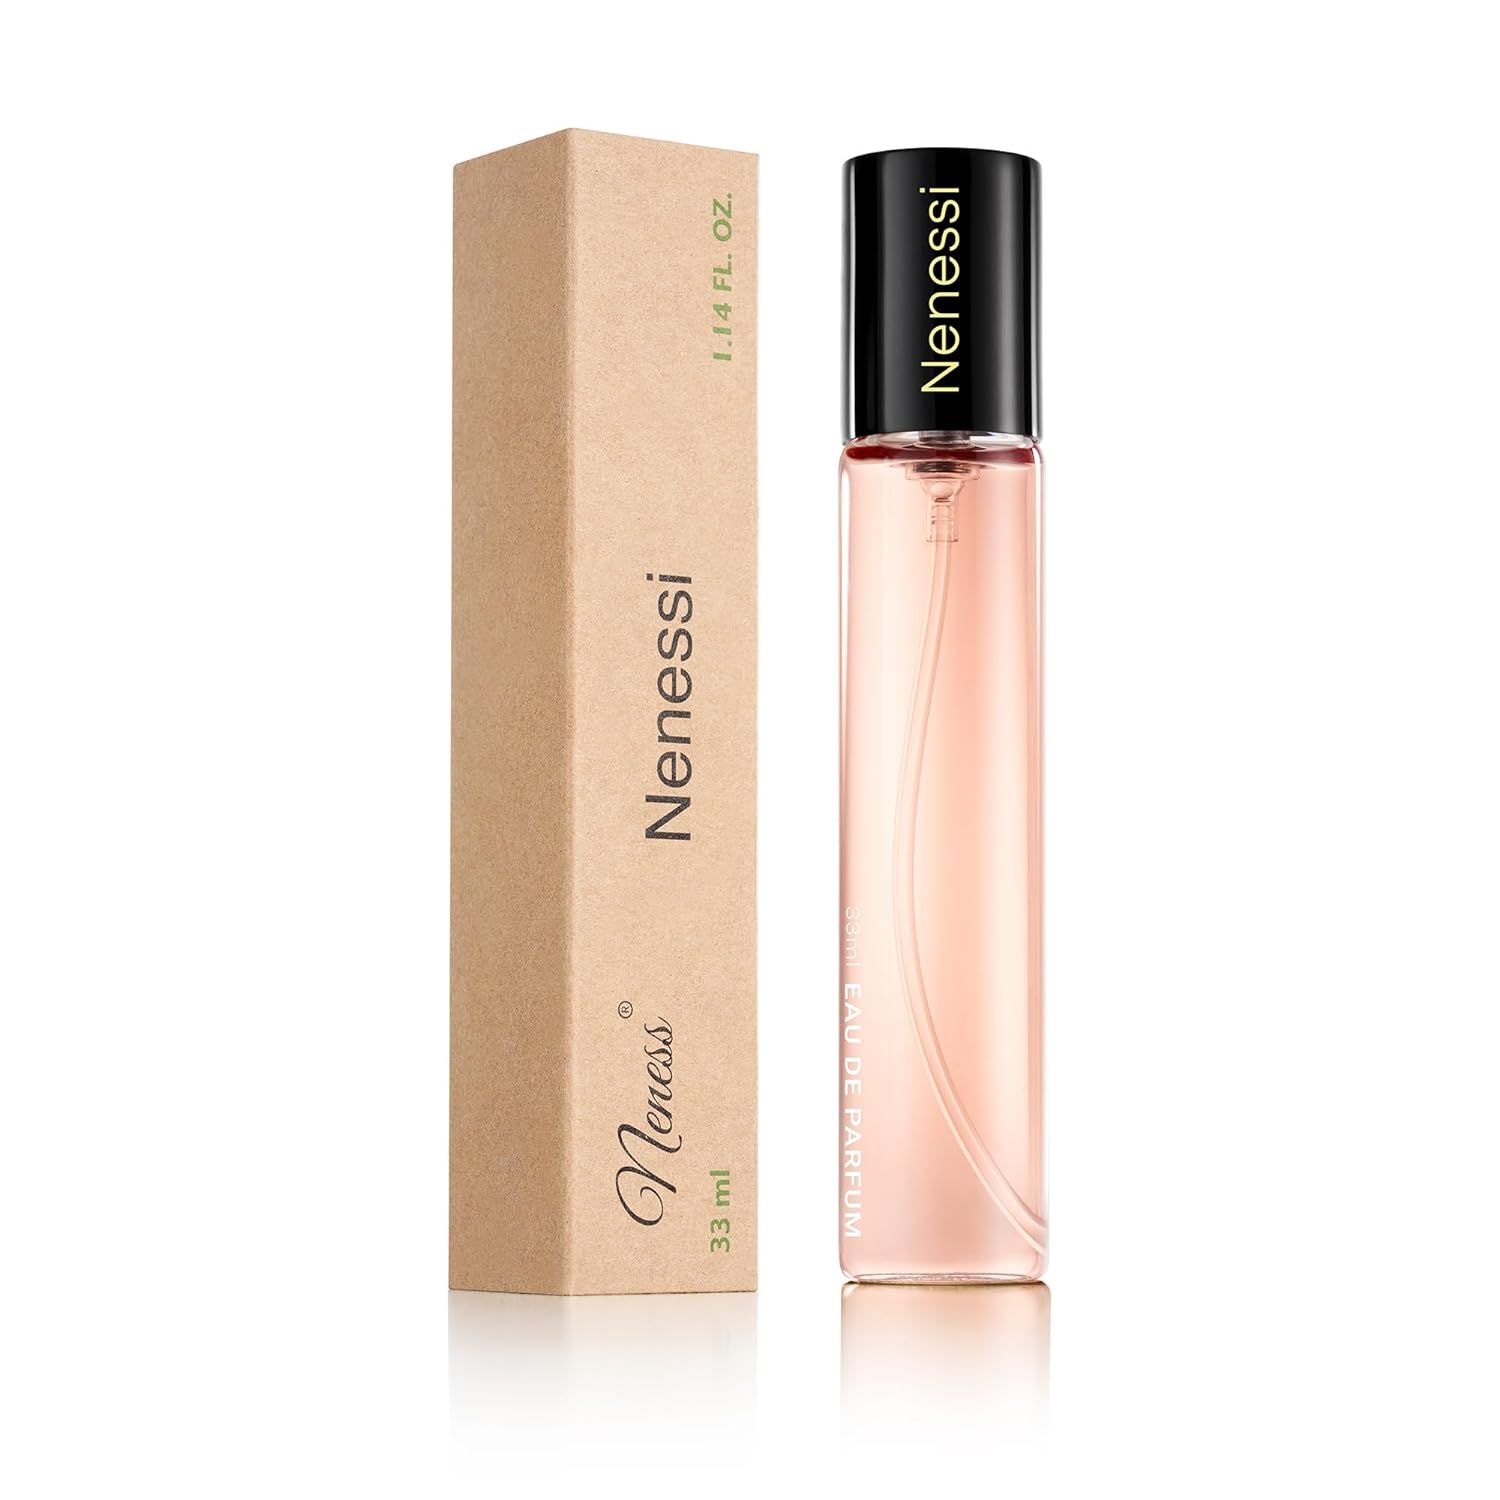 NenesSi Women\'s Perfume, Eau de Parfum, Bold and Feminine Fragrance for Any Occasion, 33 ml